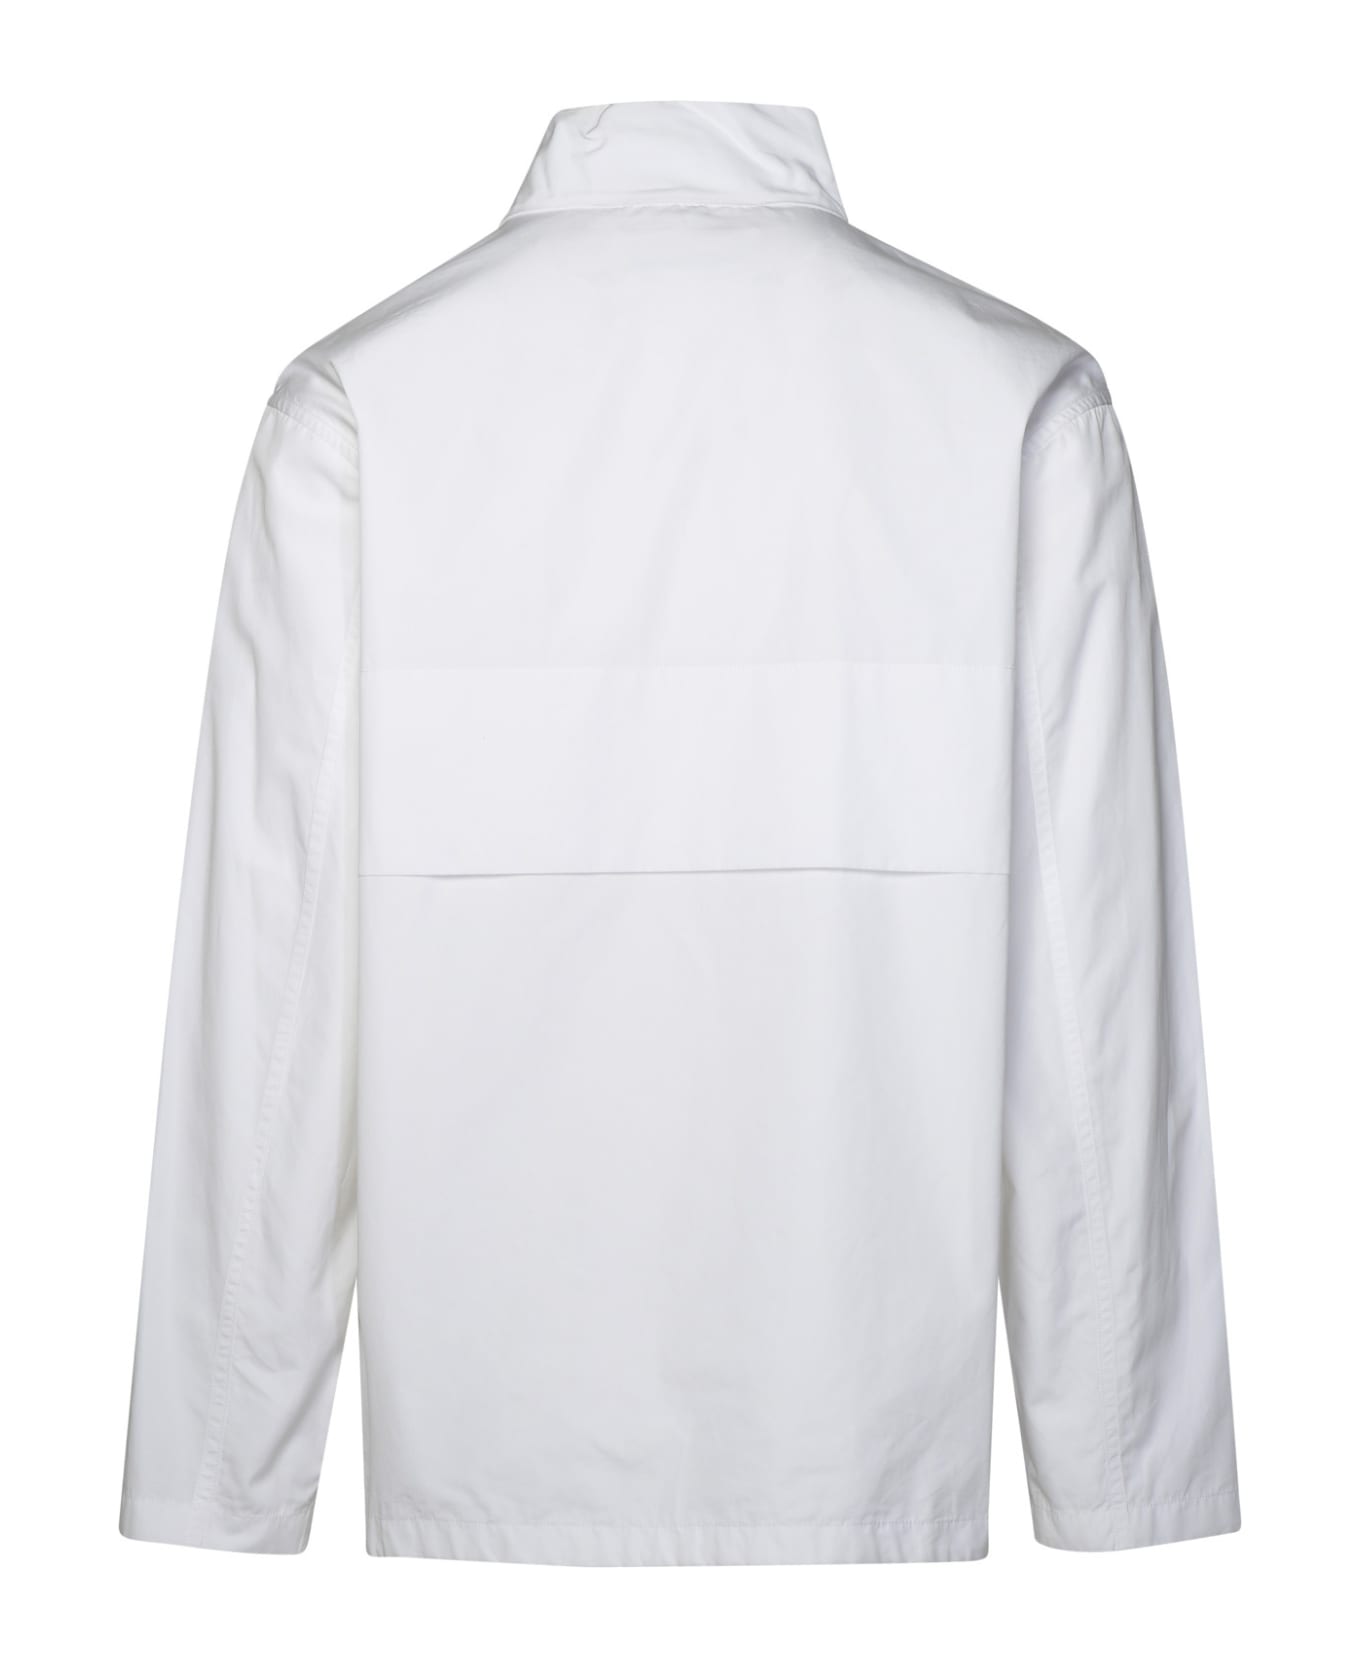 Jil Sander White Cotton Jacket - White ジャケット